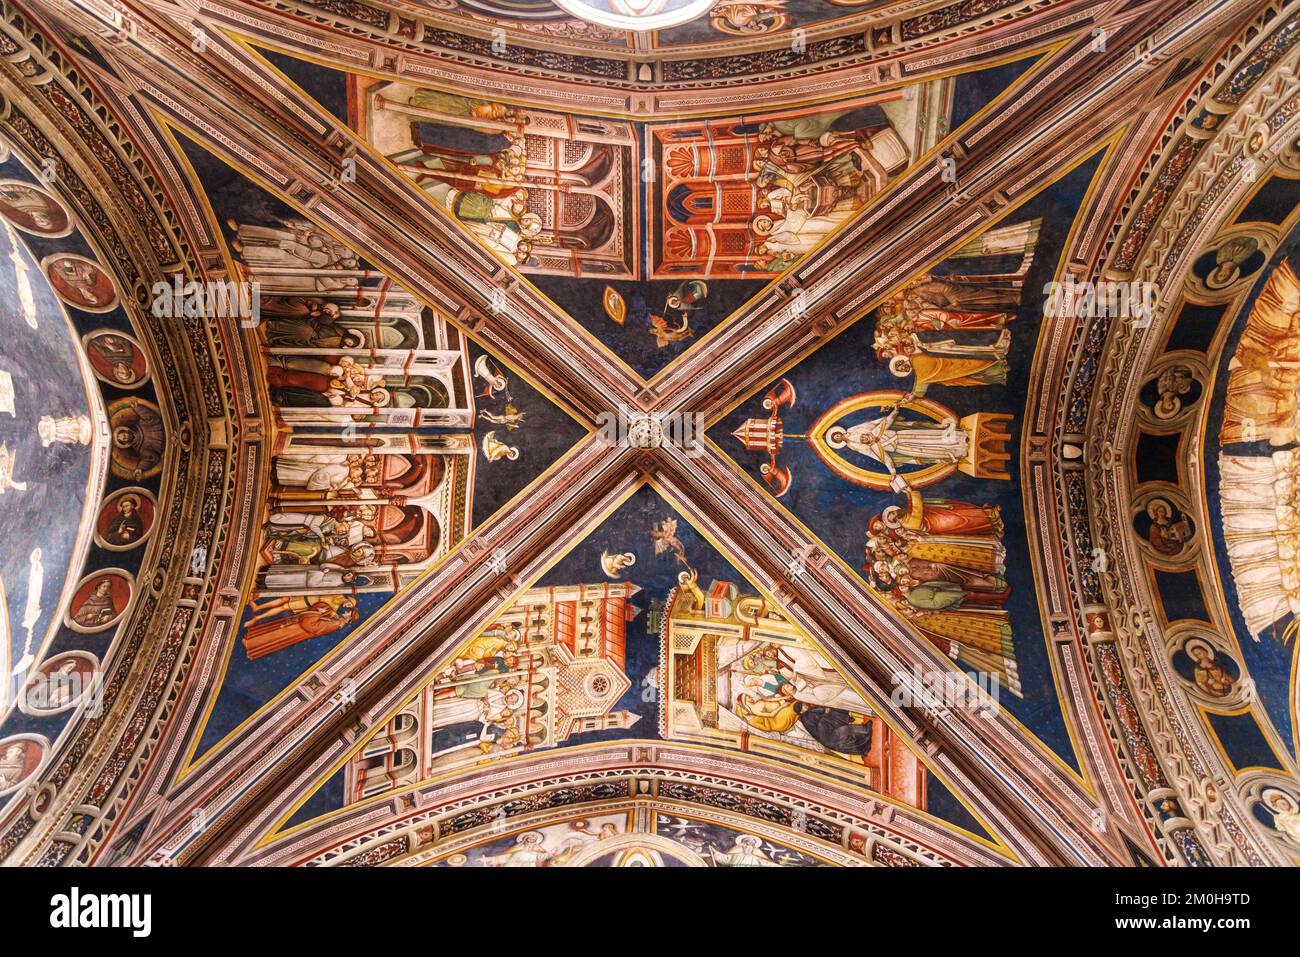 Italy, Apulia, Galatina, Basilica di Santa Caterina d'Alessandria, ceiling paintings Stock Photo